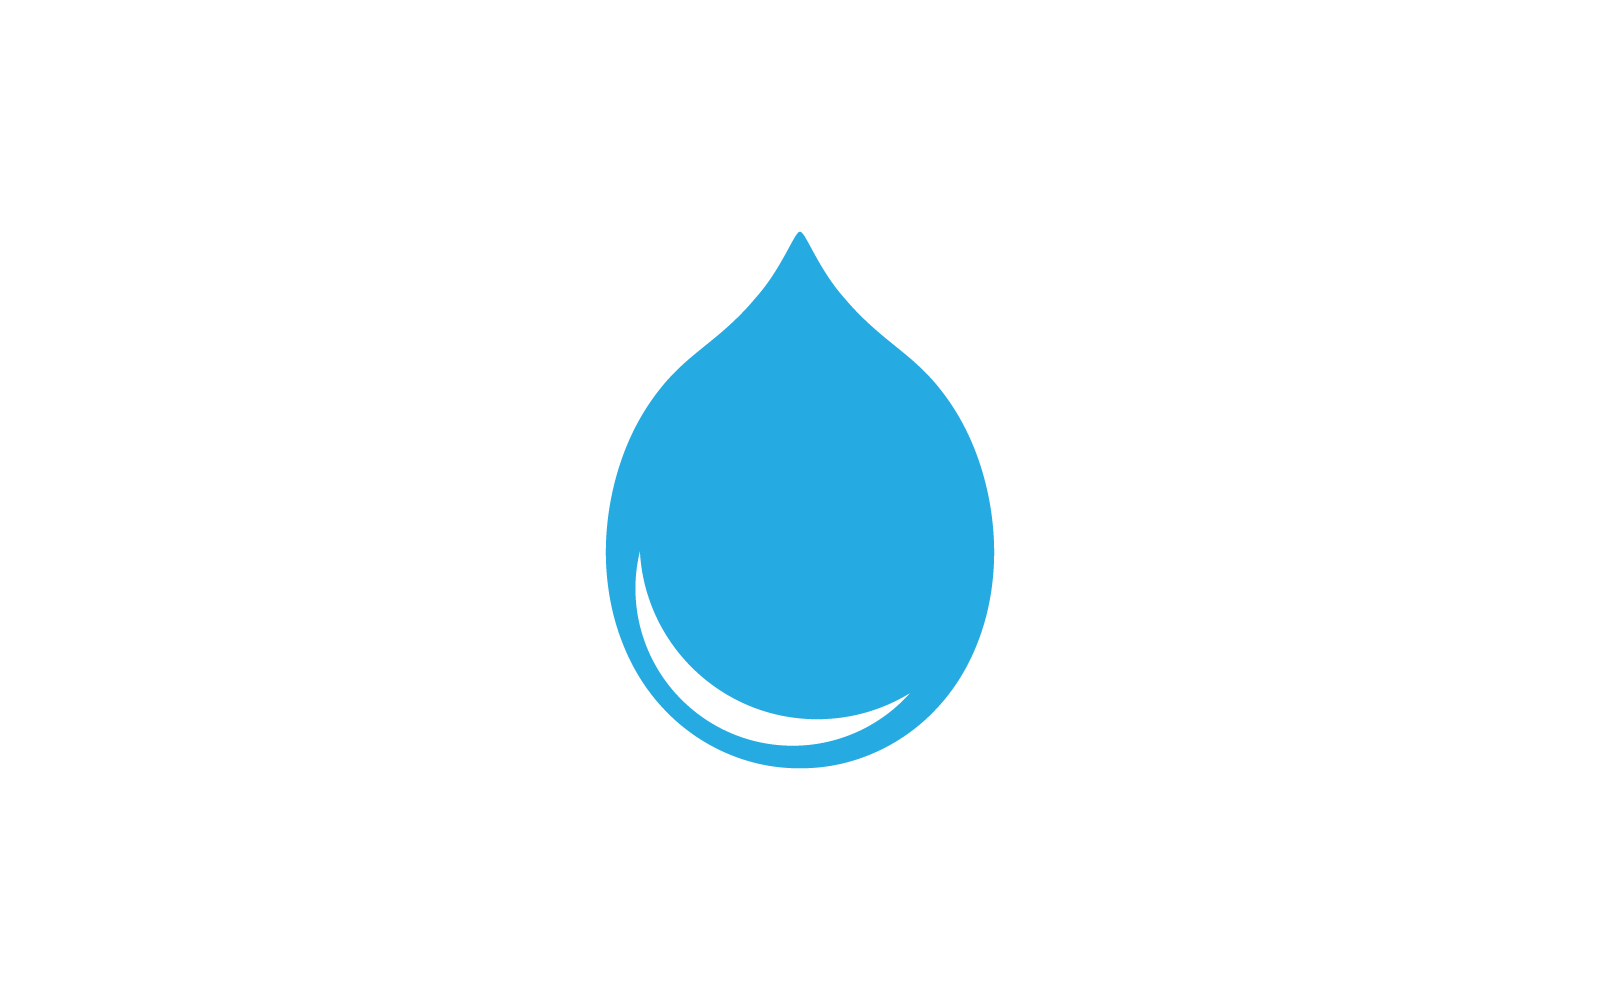 Water drop illustration logo design template